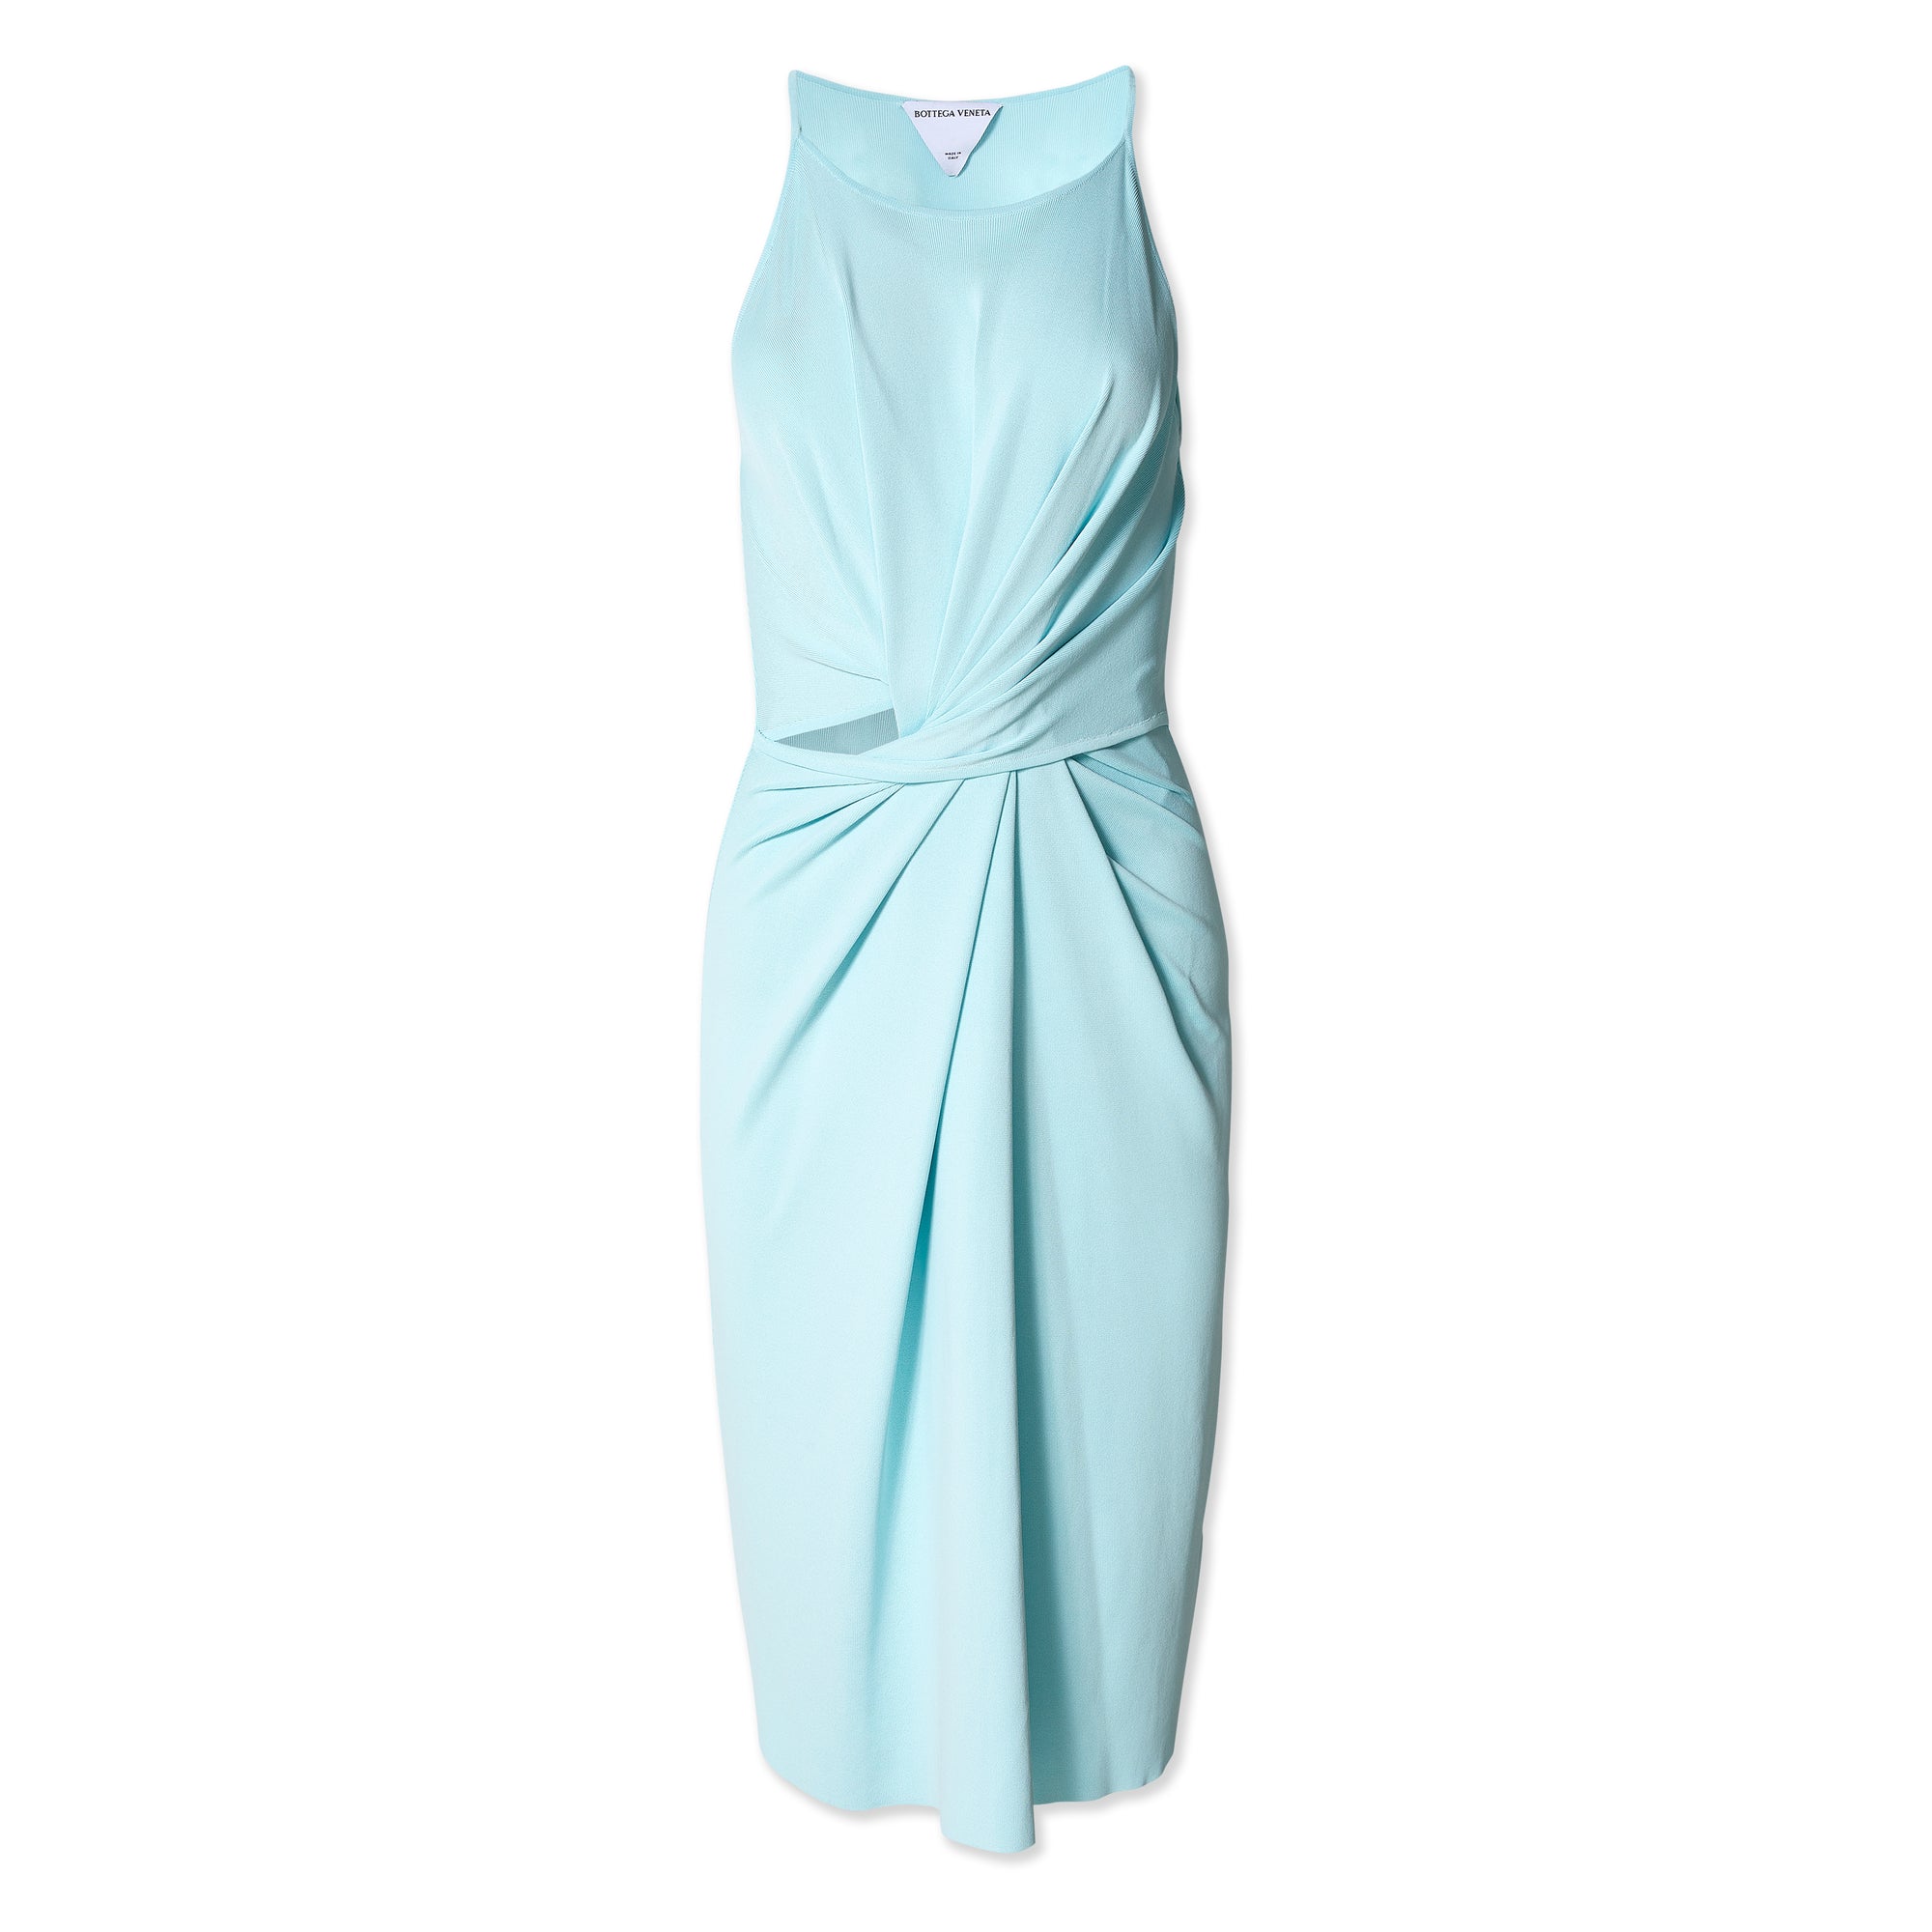 Bottega Veneta - Women’s Lightweight Dress - (Pale Blue) view 1